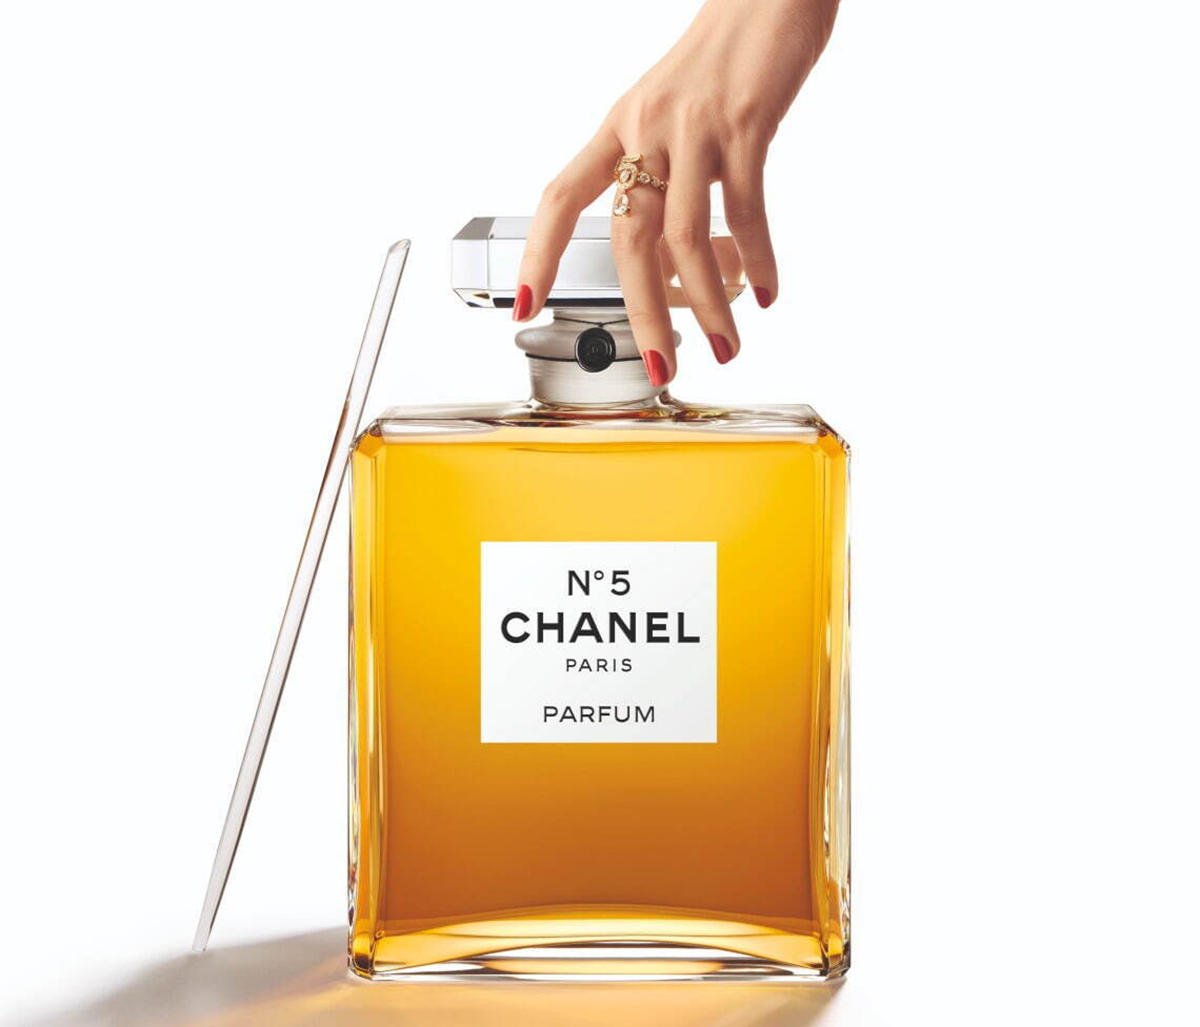 Glass and Amber Liquid 2000mL Chanel No. 5 Eau de Parum Factice Bottle, Handbags & Accessories, The Chanel Collection, 2022